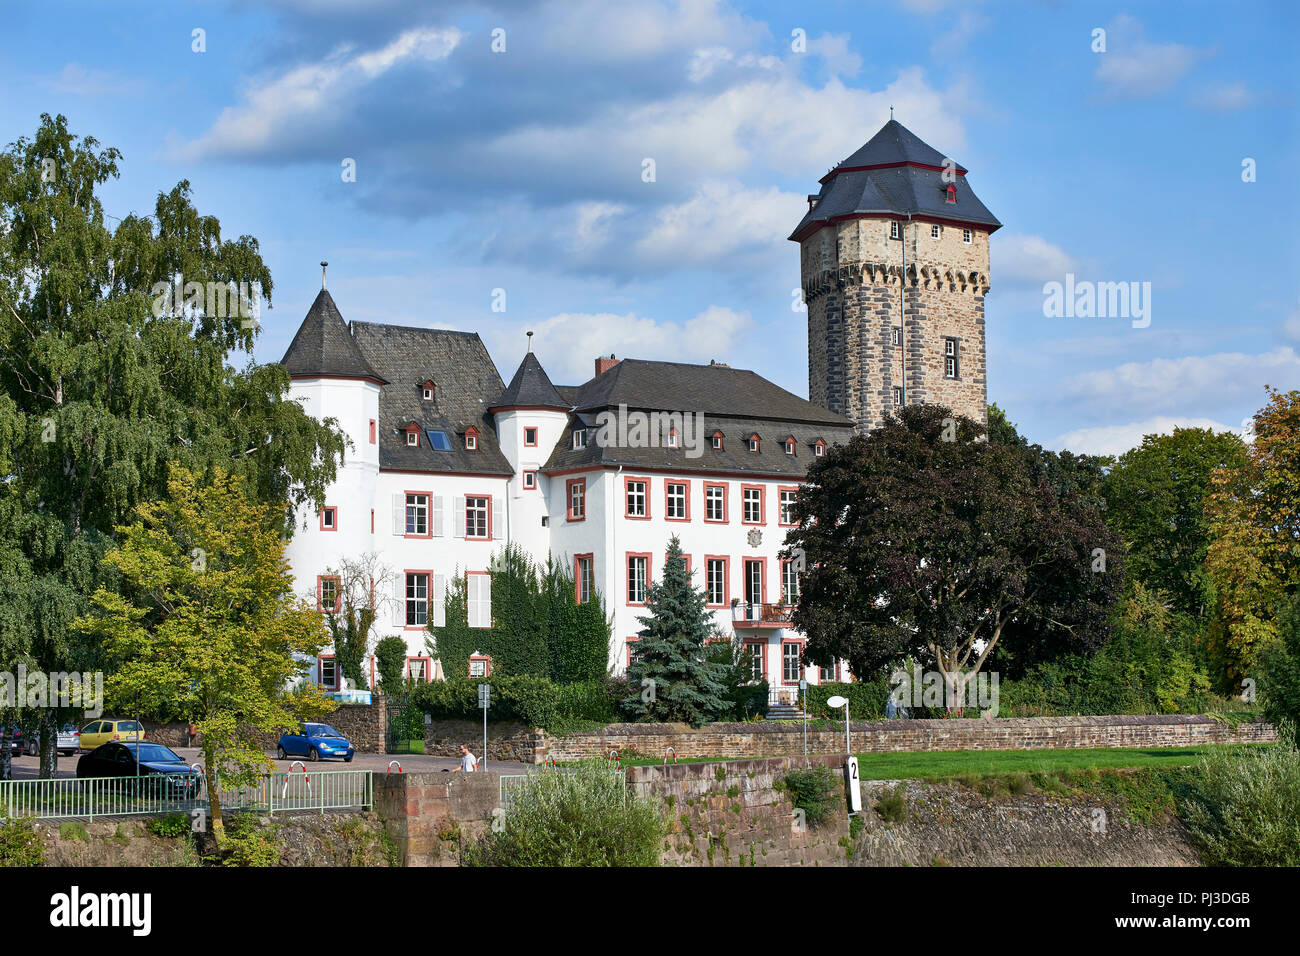 Martinsschloss (private), Lahnstein, river Rhine Germany, Stock Photo